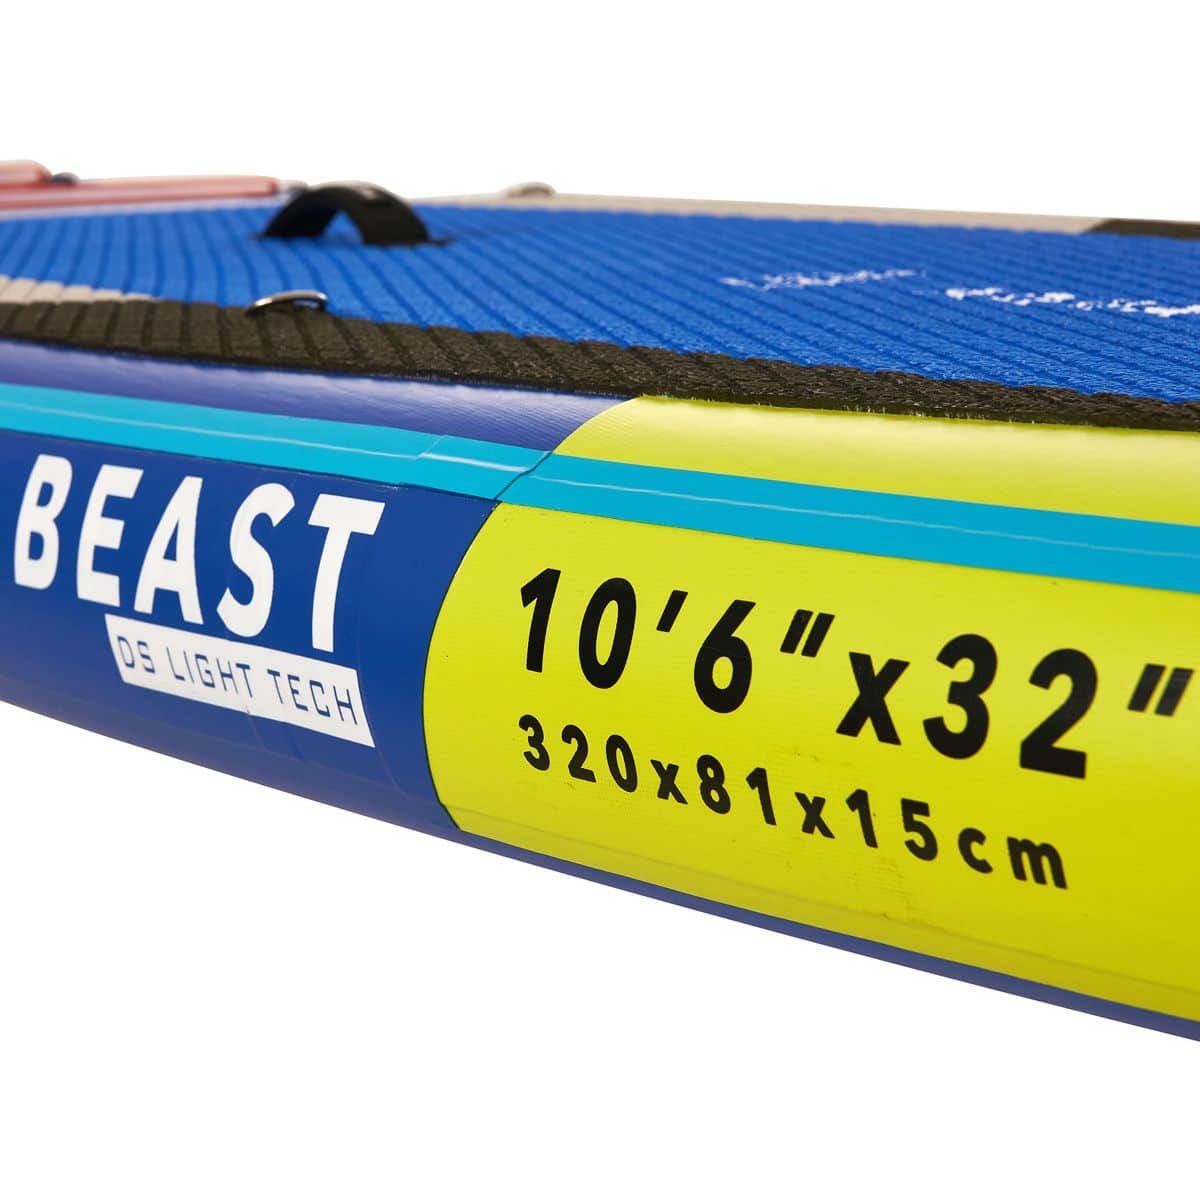 beast-product-11